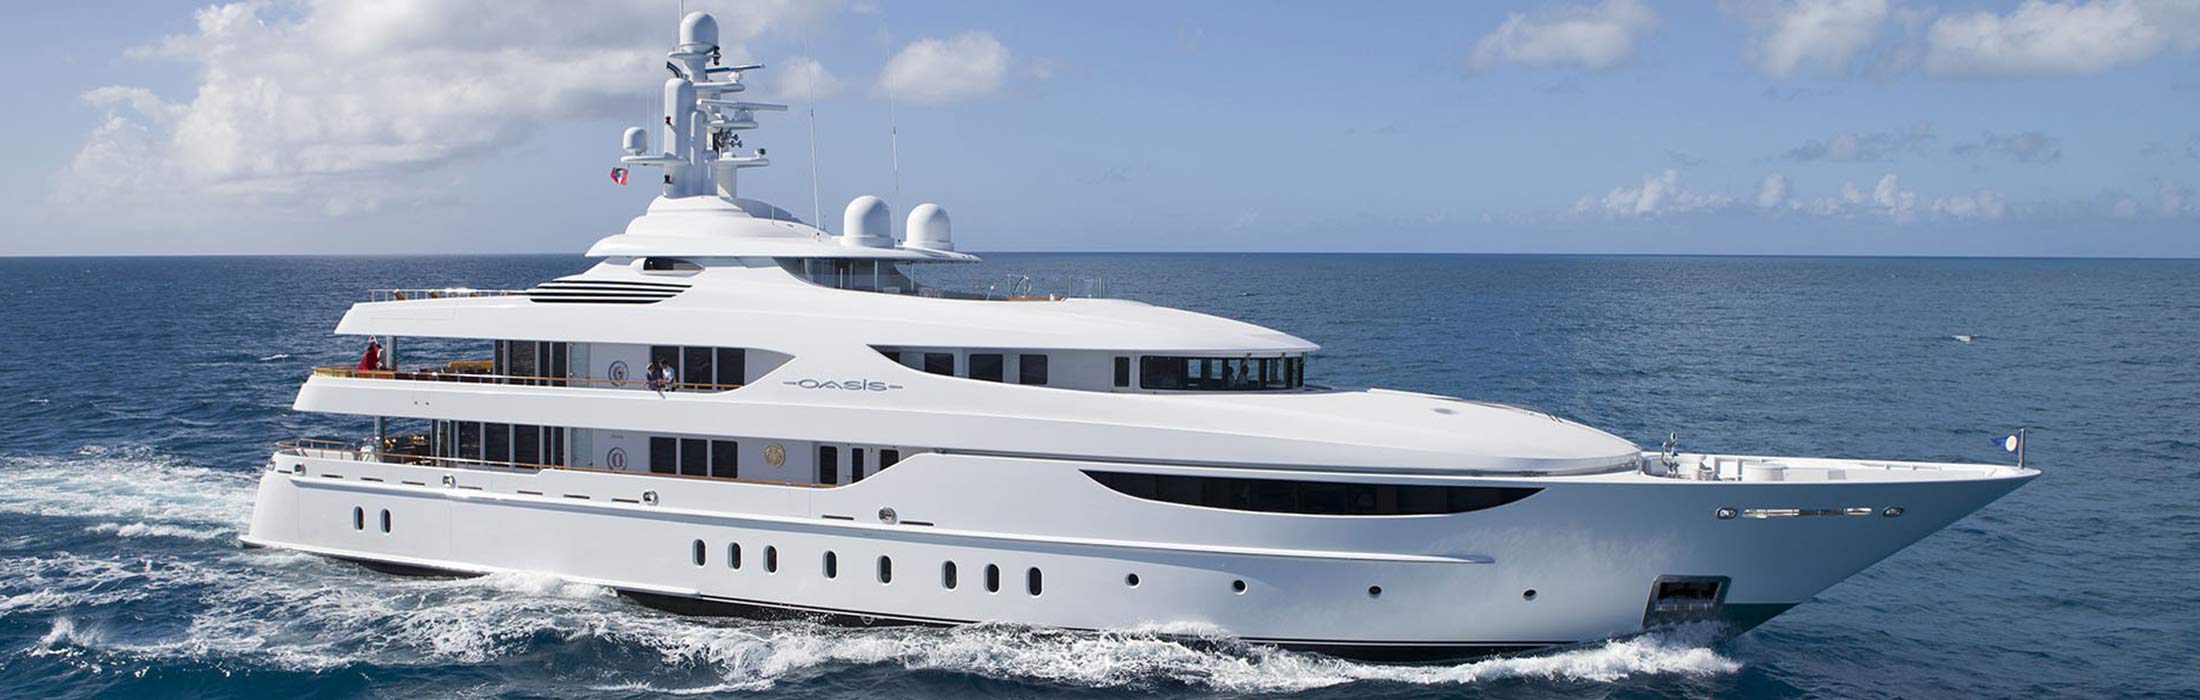 luxury yacht charter destinations carribean bahamas carribean leeward islands main slider 1 5